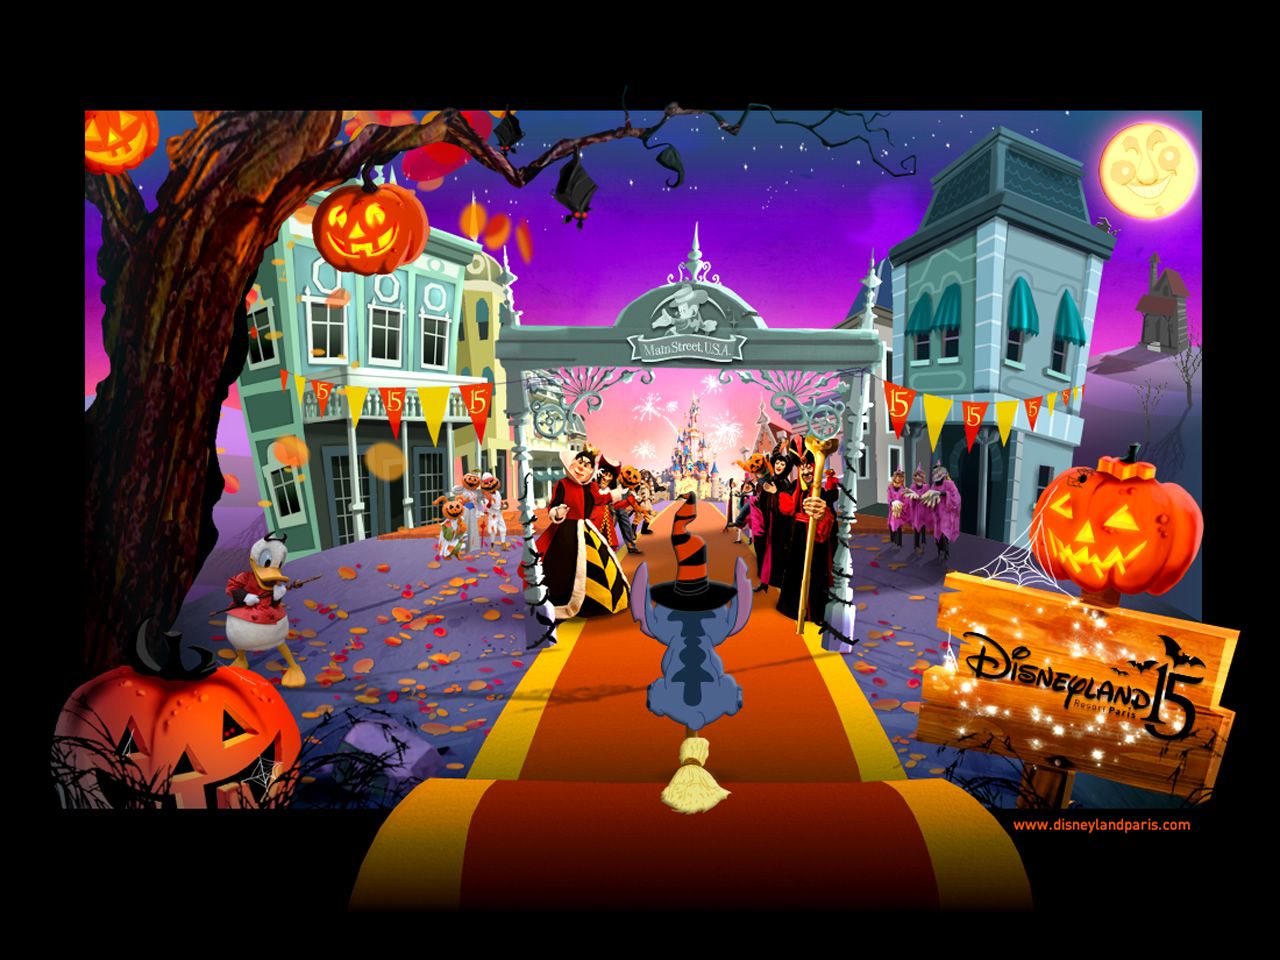 Free download 1280x960 Disney Halloween desktop PC and Mac wallpapers [1280x960] for your Desktop, Mobile & Tablet